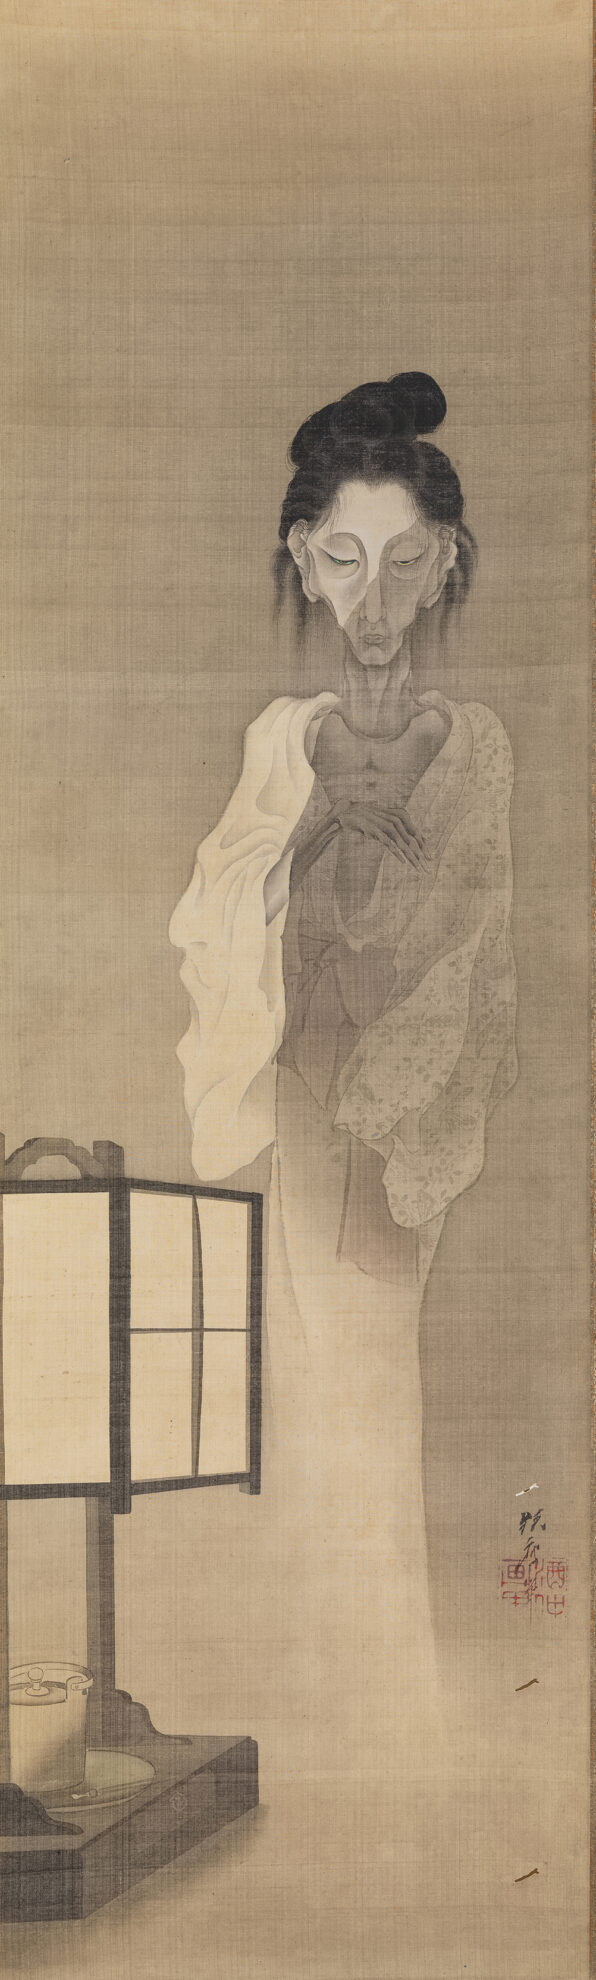 Kawanabe Kyōsai, Ghost, c. 1868–70. Hanging scroll: ink, light colour and gold on silk. 105.6 × 32 cm. Israel Goldman Collection, London. Photo: Ken Adlard